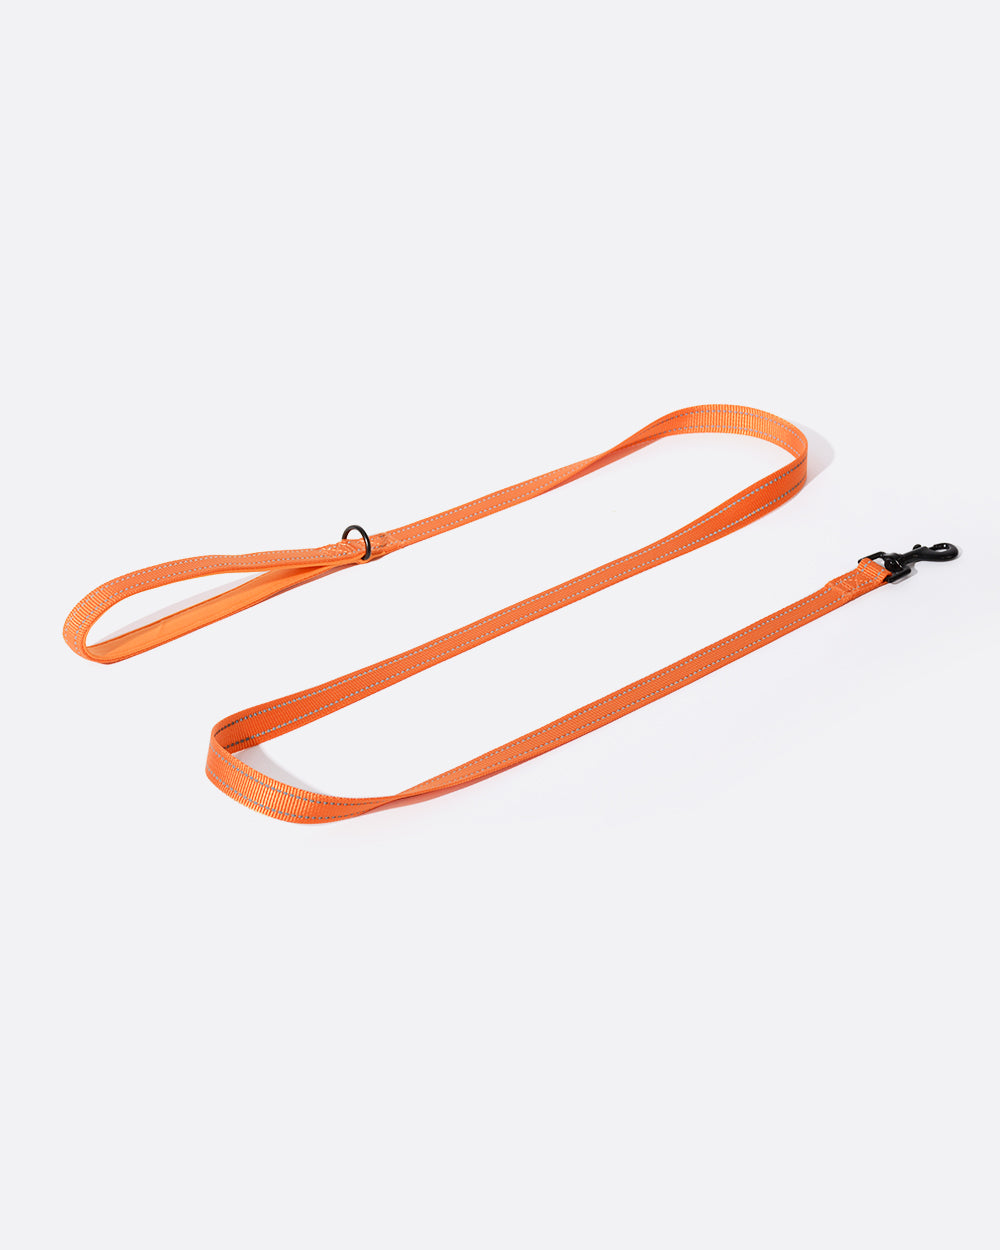 Simply Soft Reflective Dog Leash - Neon Orange